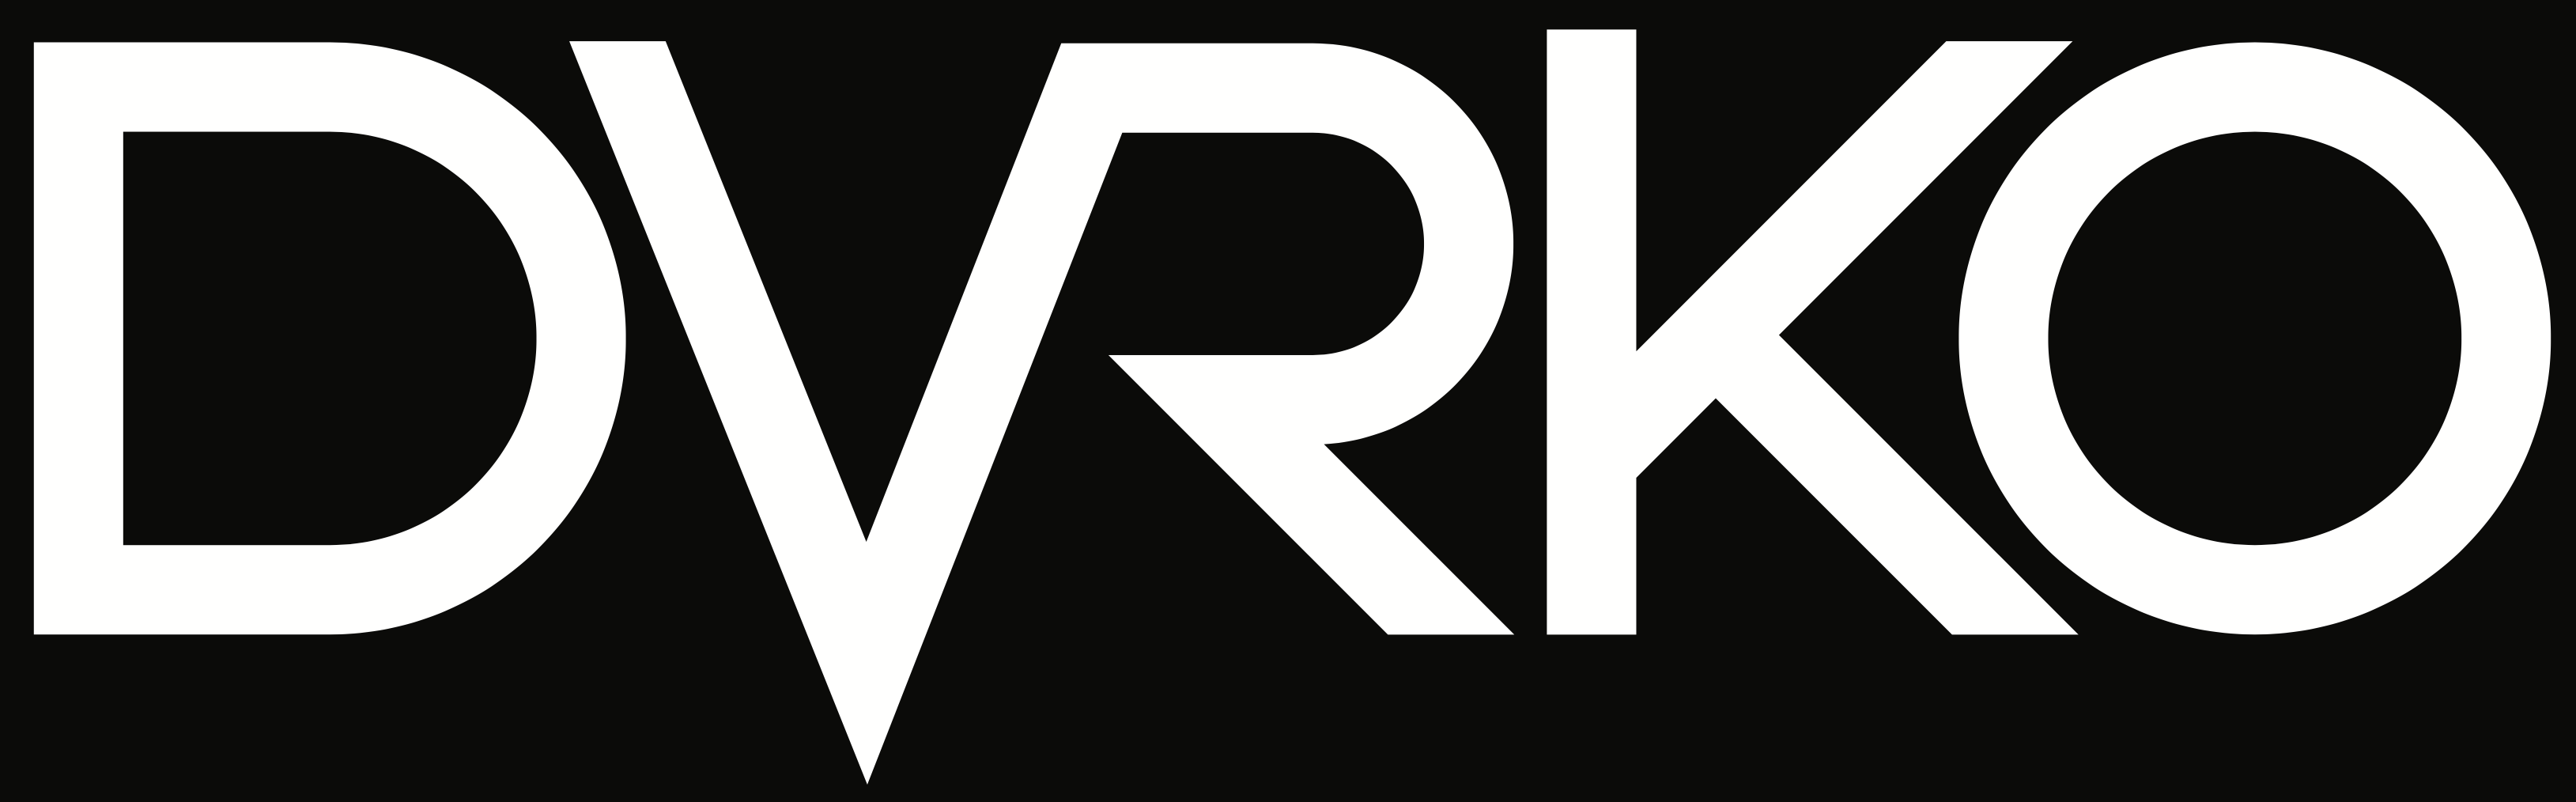 DVRKO - logo